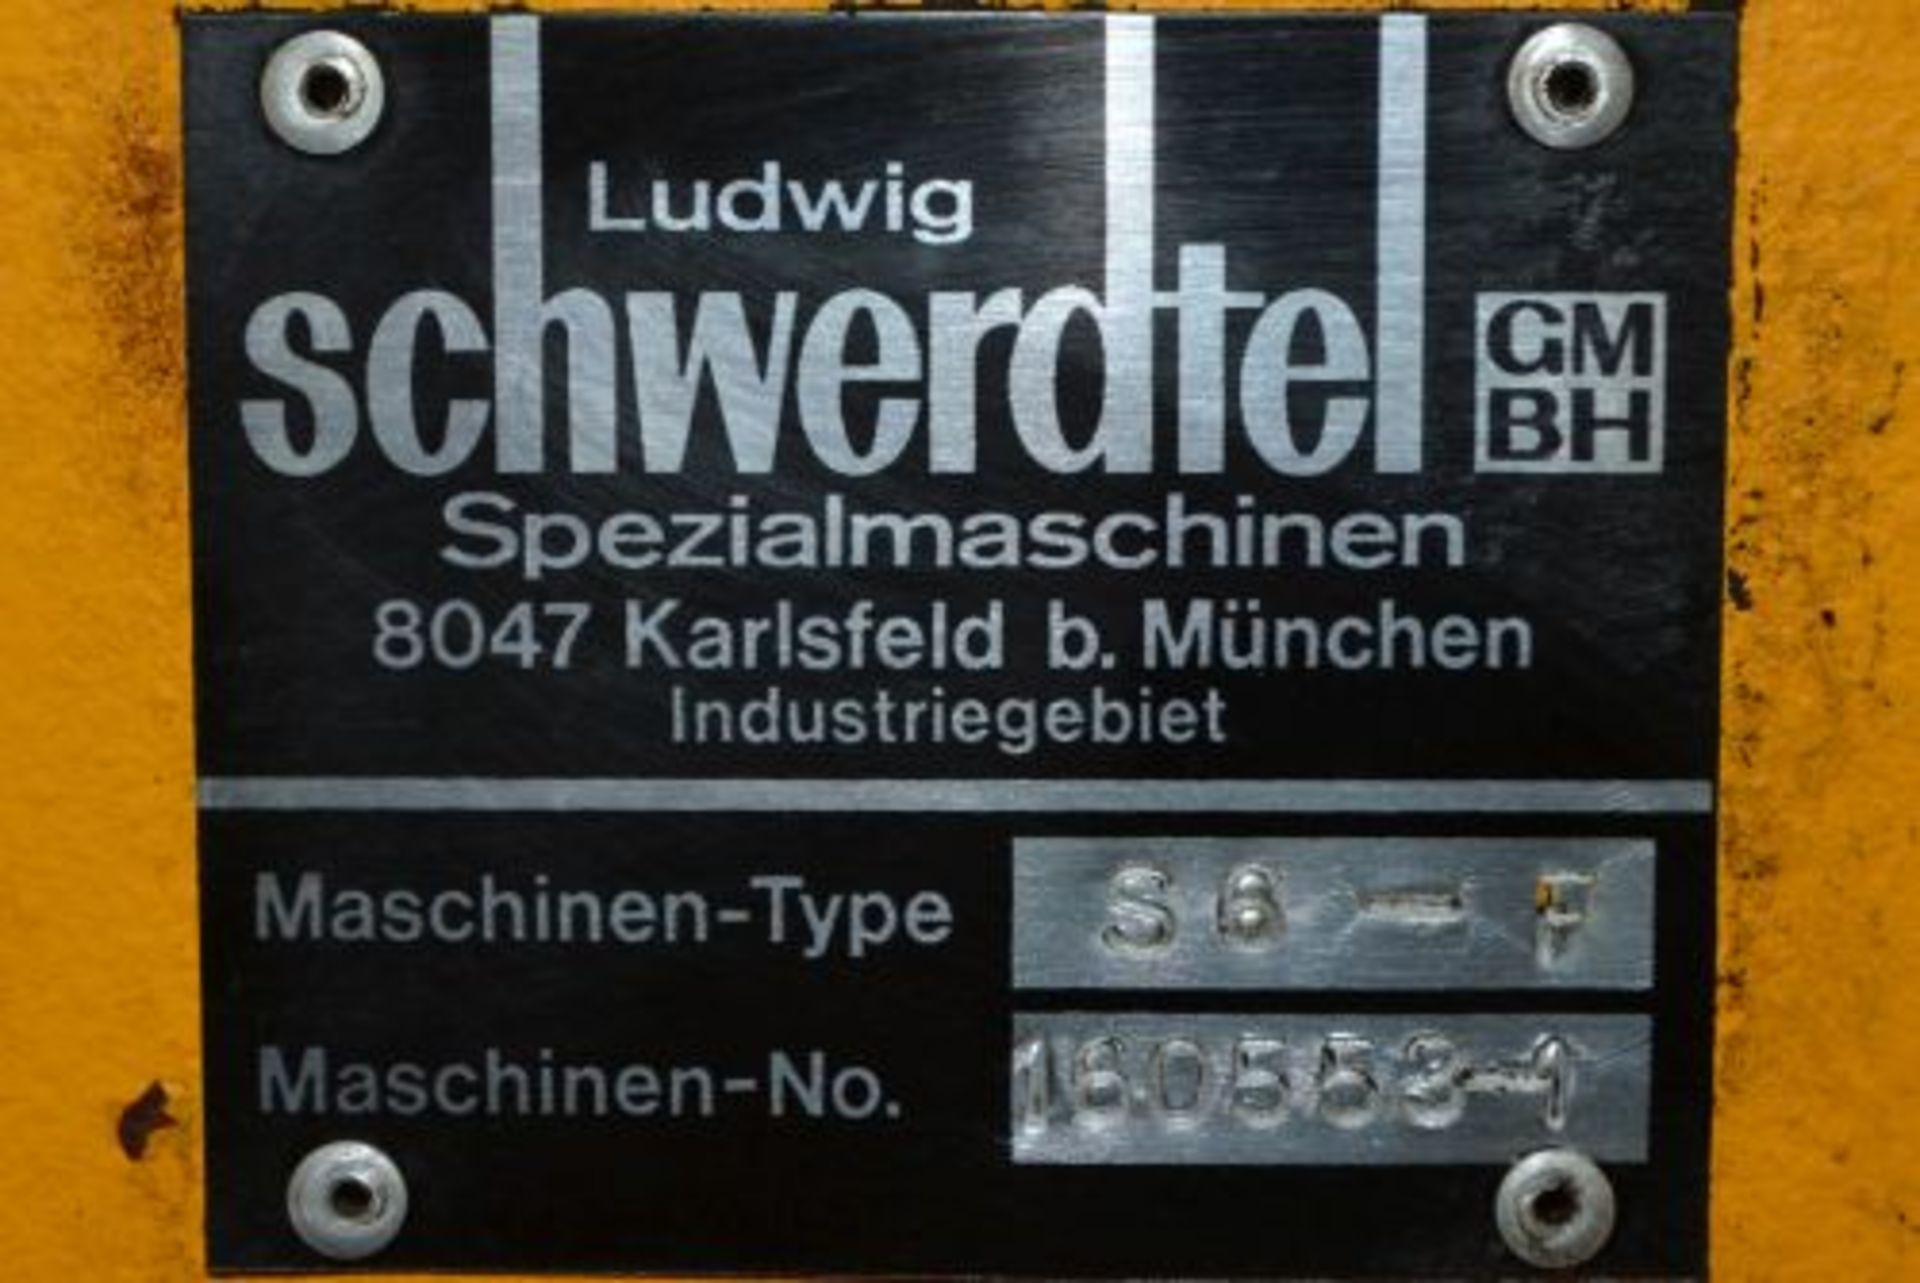 Schwerdtel hydraulic barrel press - Image 9 of 11